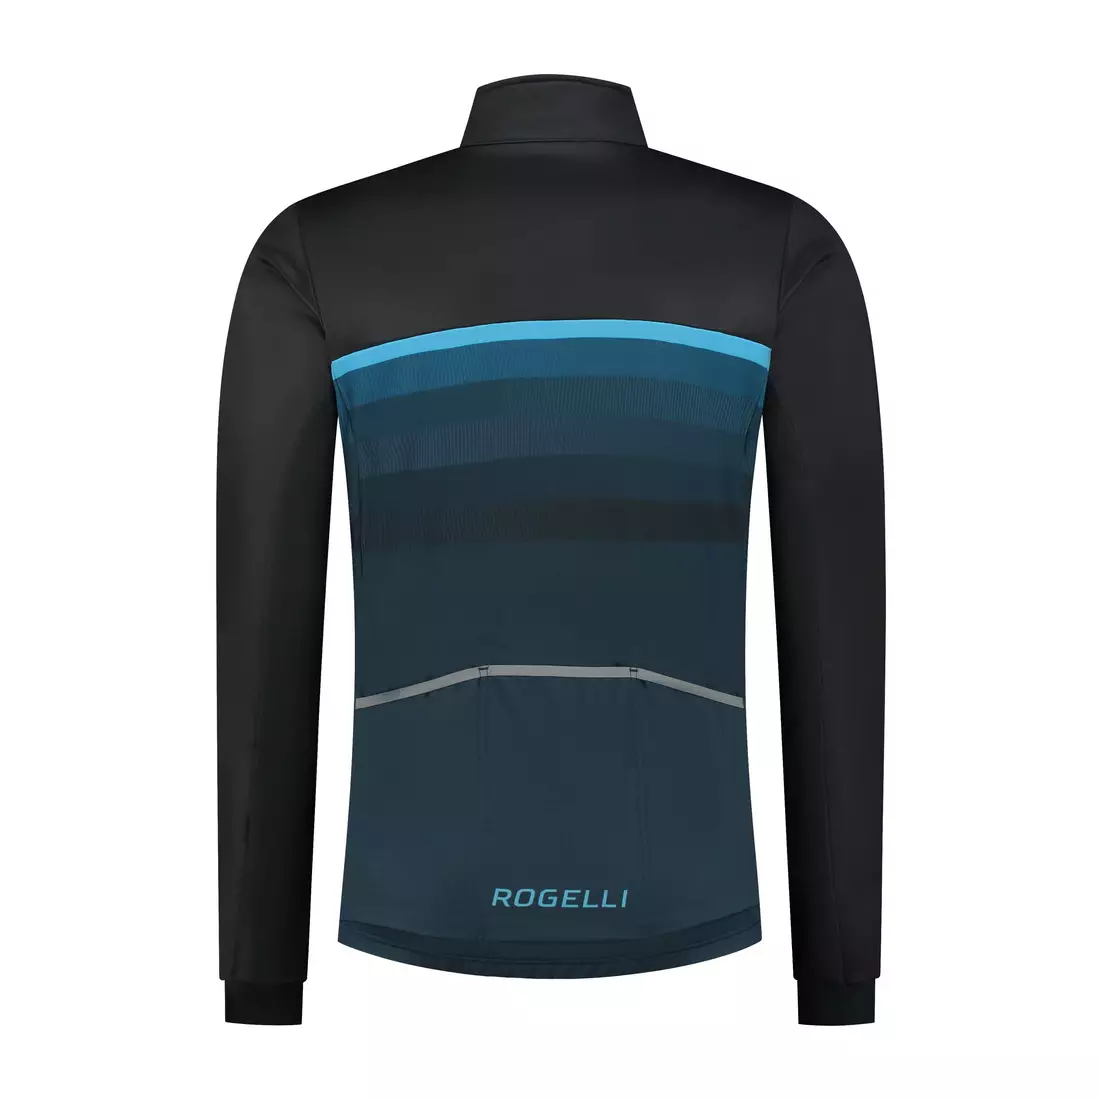 Rogelli zimná cyklistická bunda HERO II, čierno-modrá